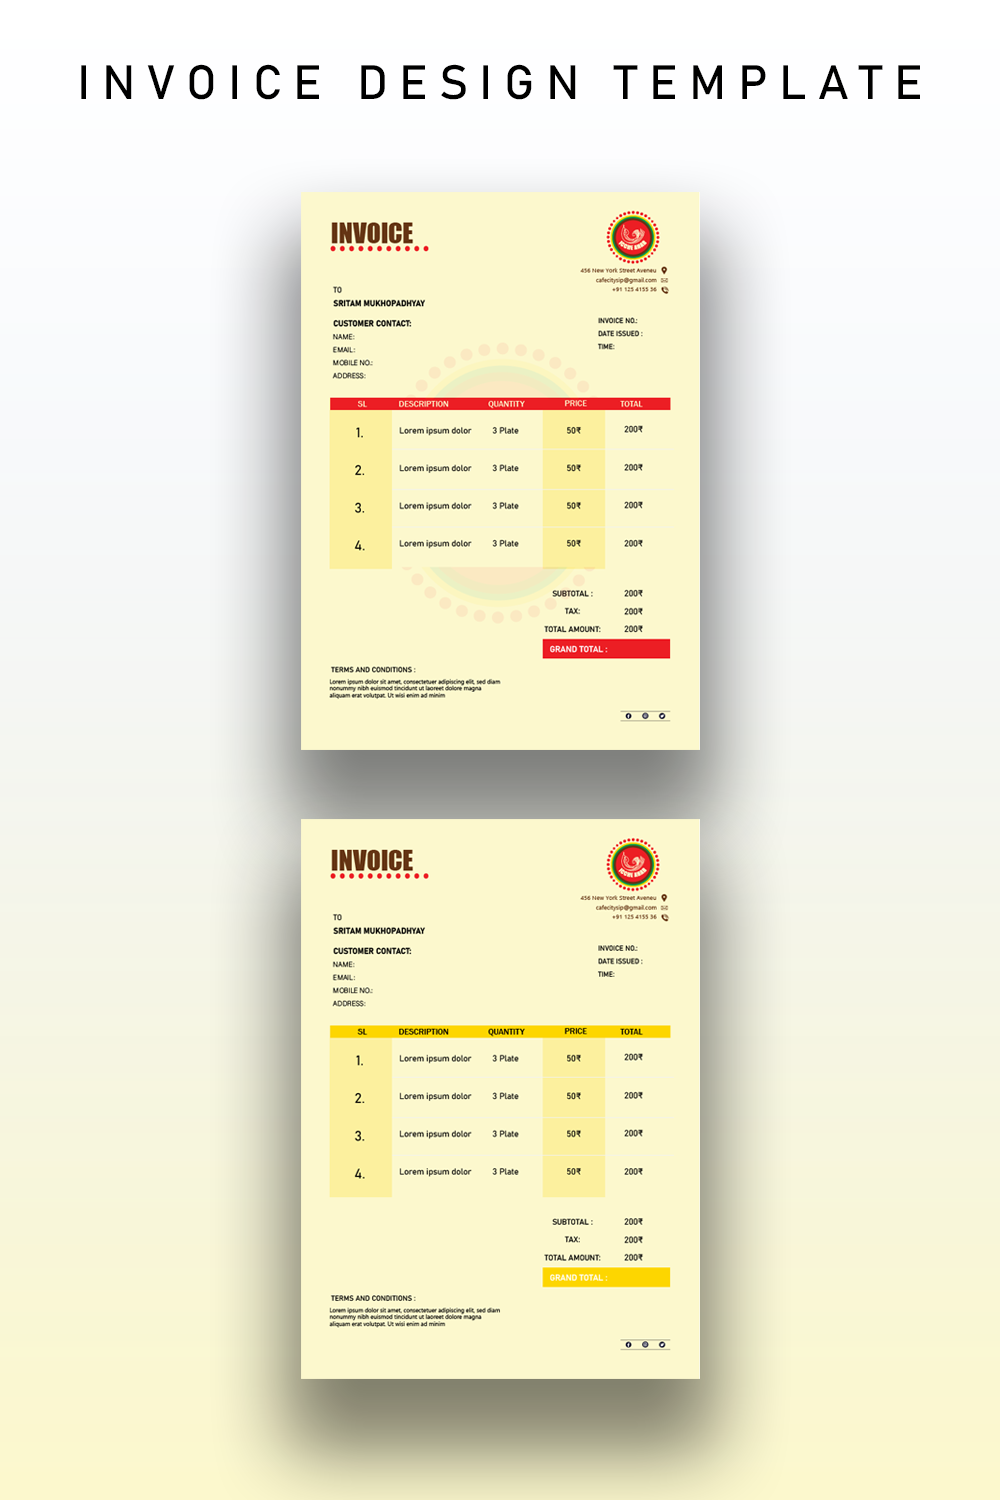 Unique Editable Invoice Design Template for Restraurent pinterest preview image.